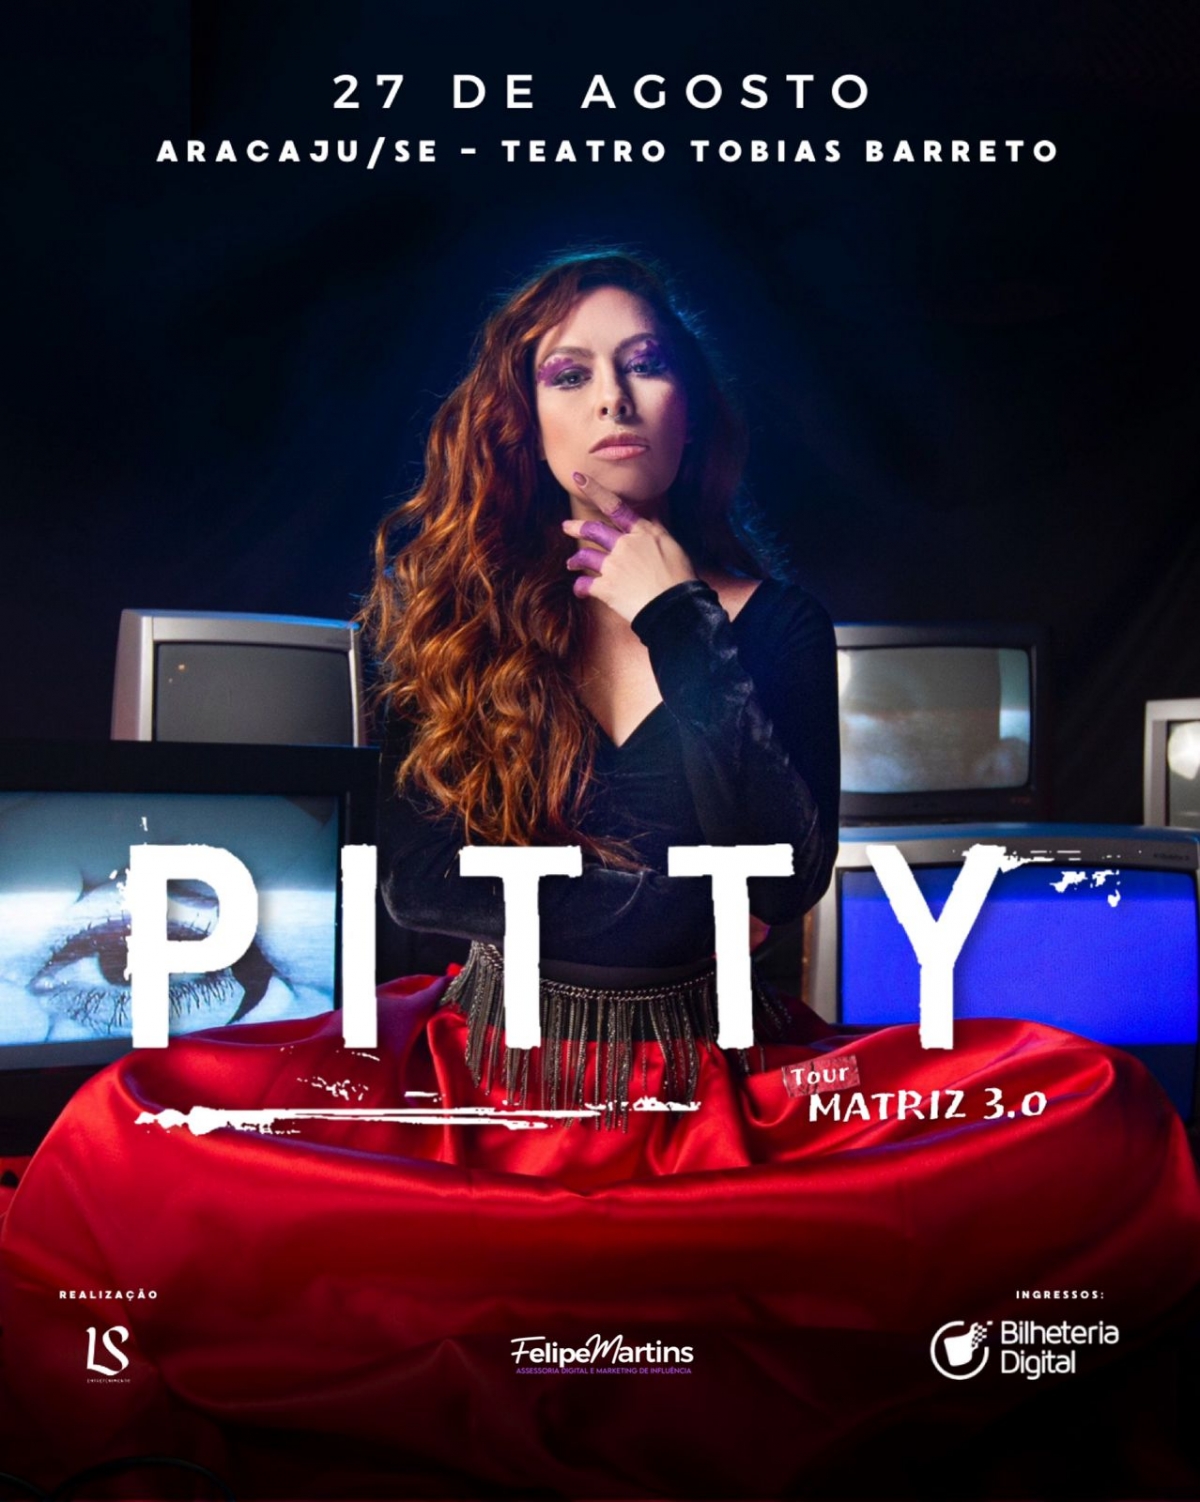 Pitty apresenta turnê "Matriz 3.0" em Aracaju - Imagem: Divulgação